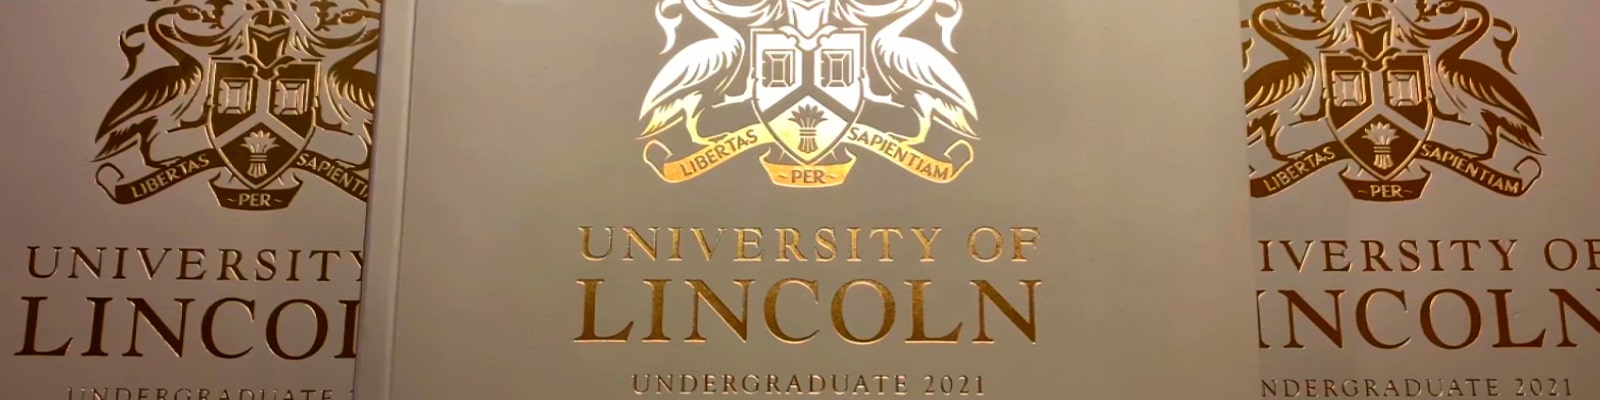 University of Lincoln undergraduate prospectus 2021.